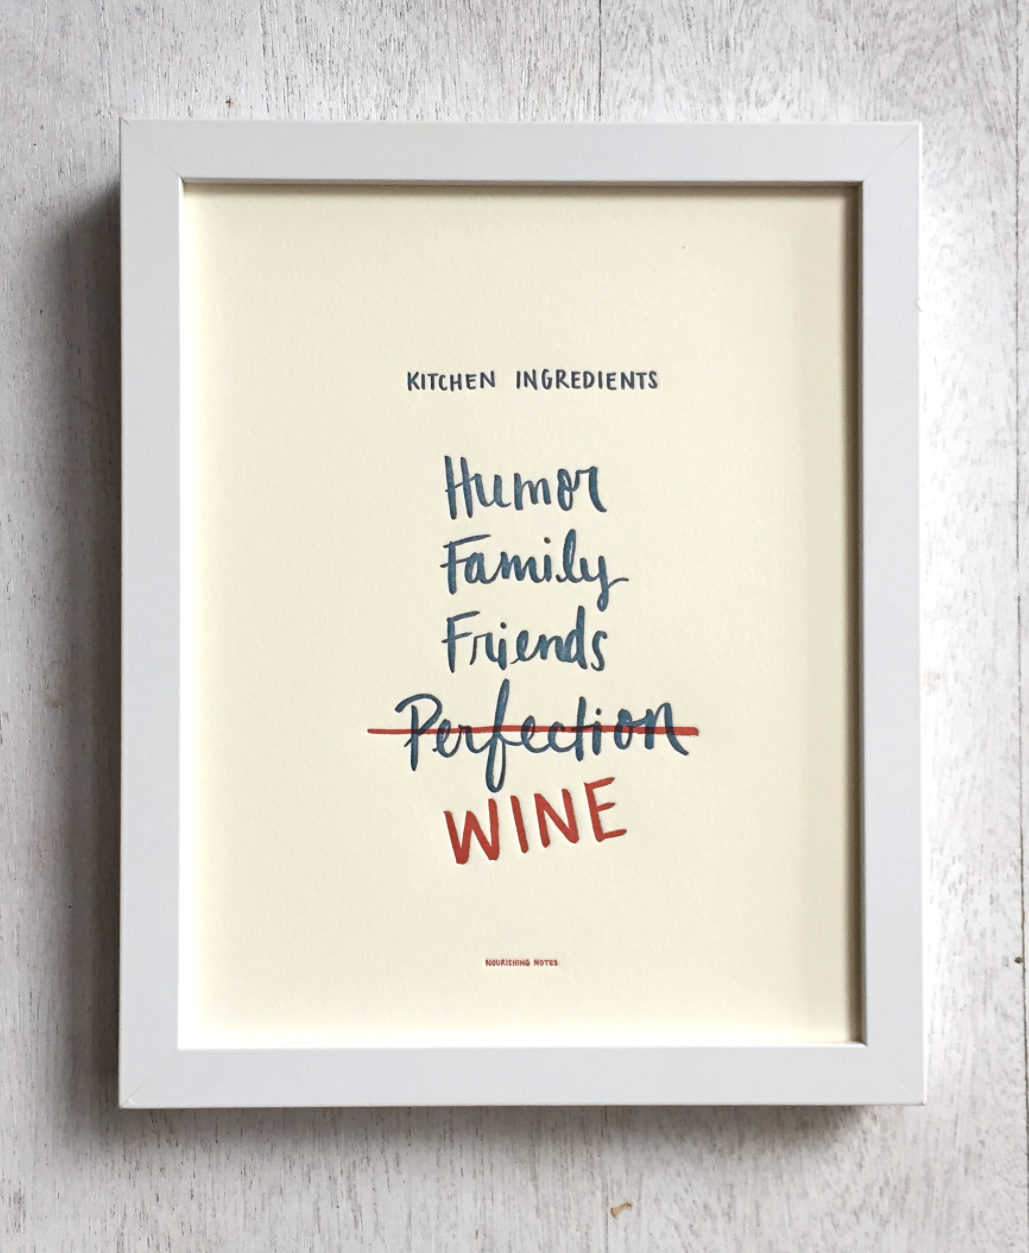 Nourishing Notes - Humor, Family, Friends, Wine - Print